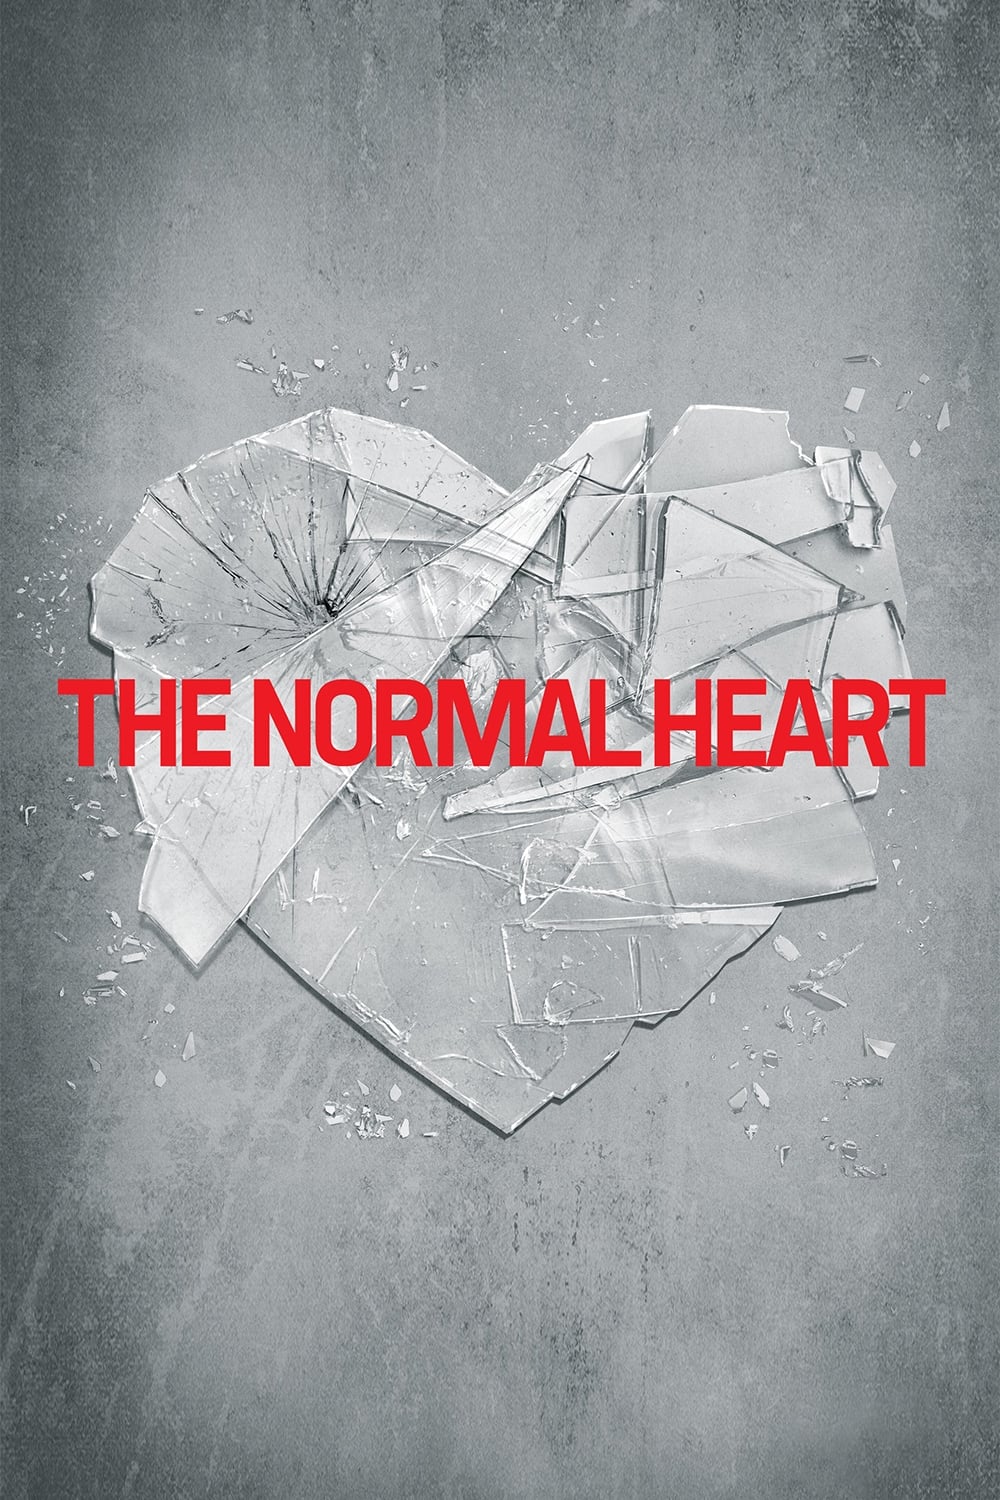 The Normal Hearth [HD] (2014)